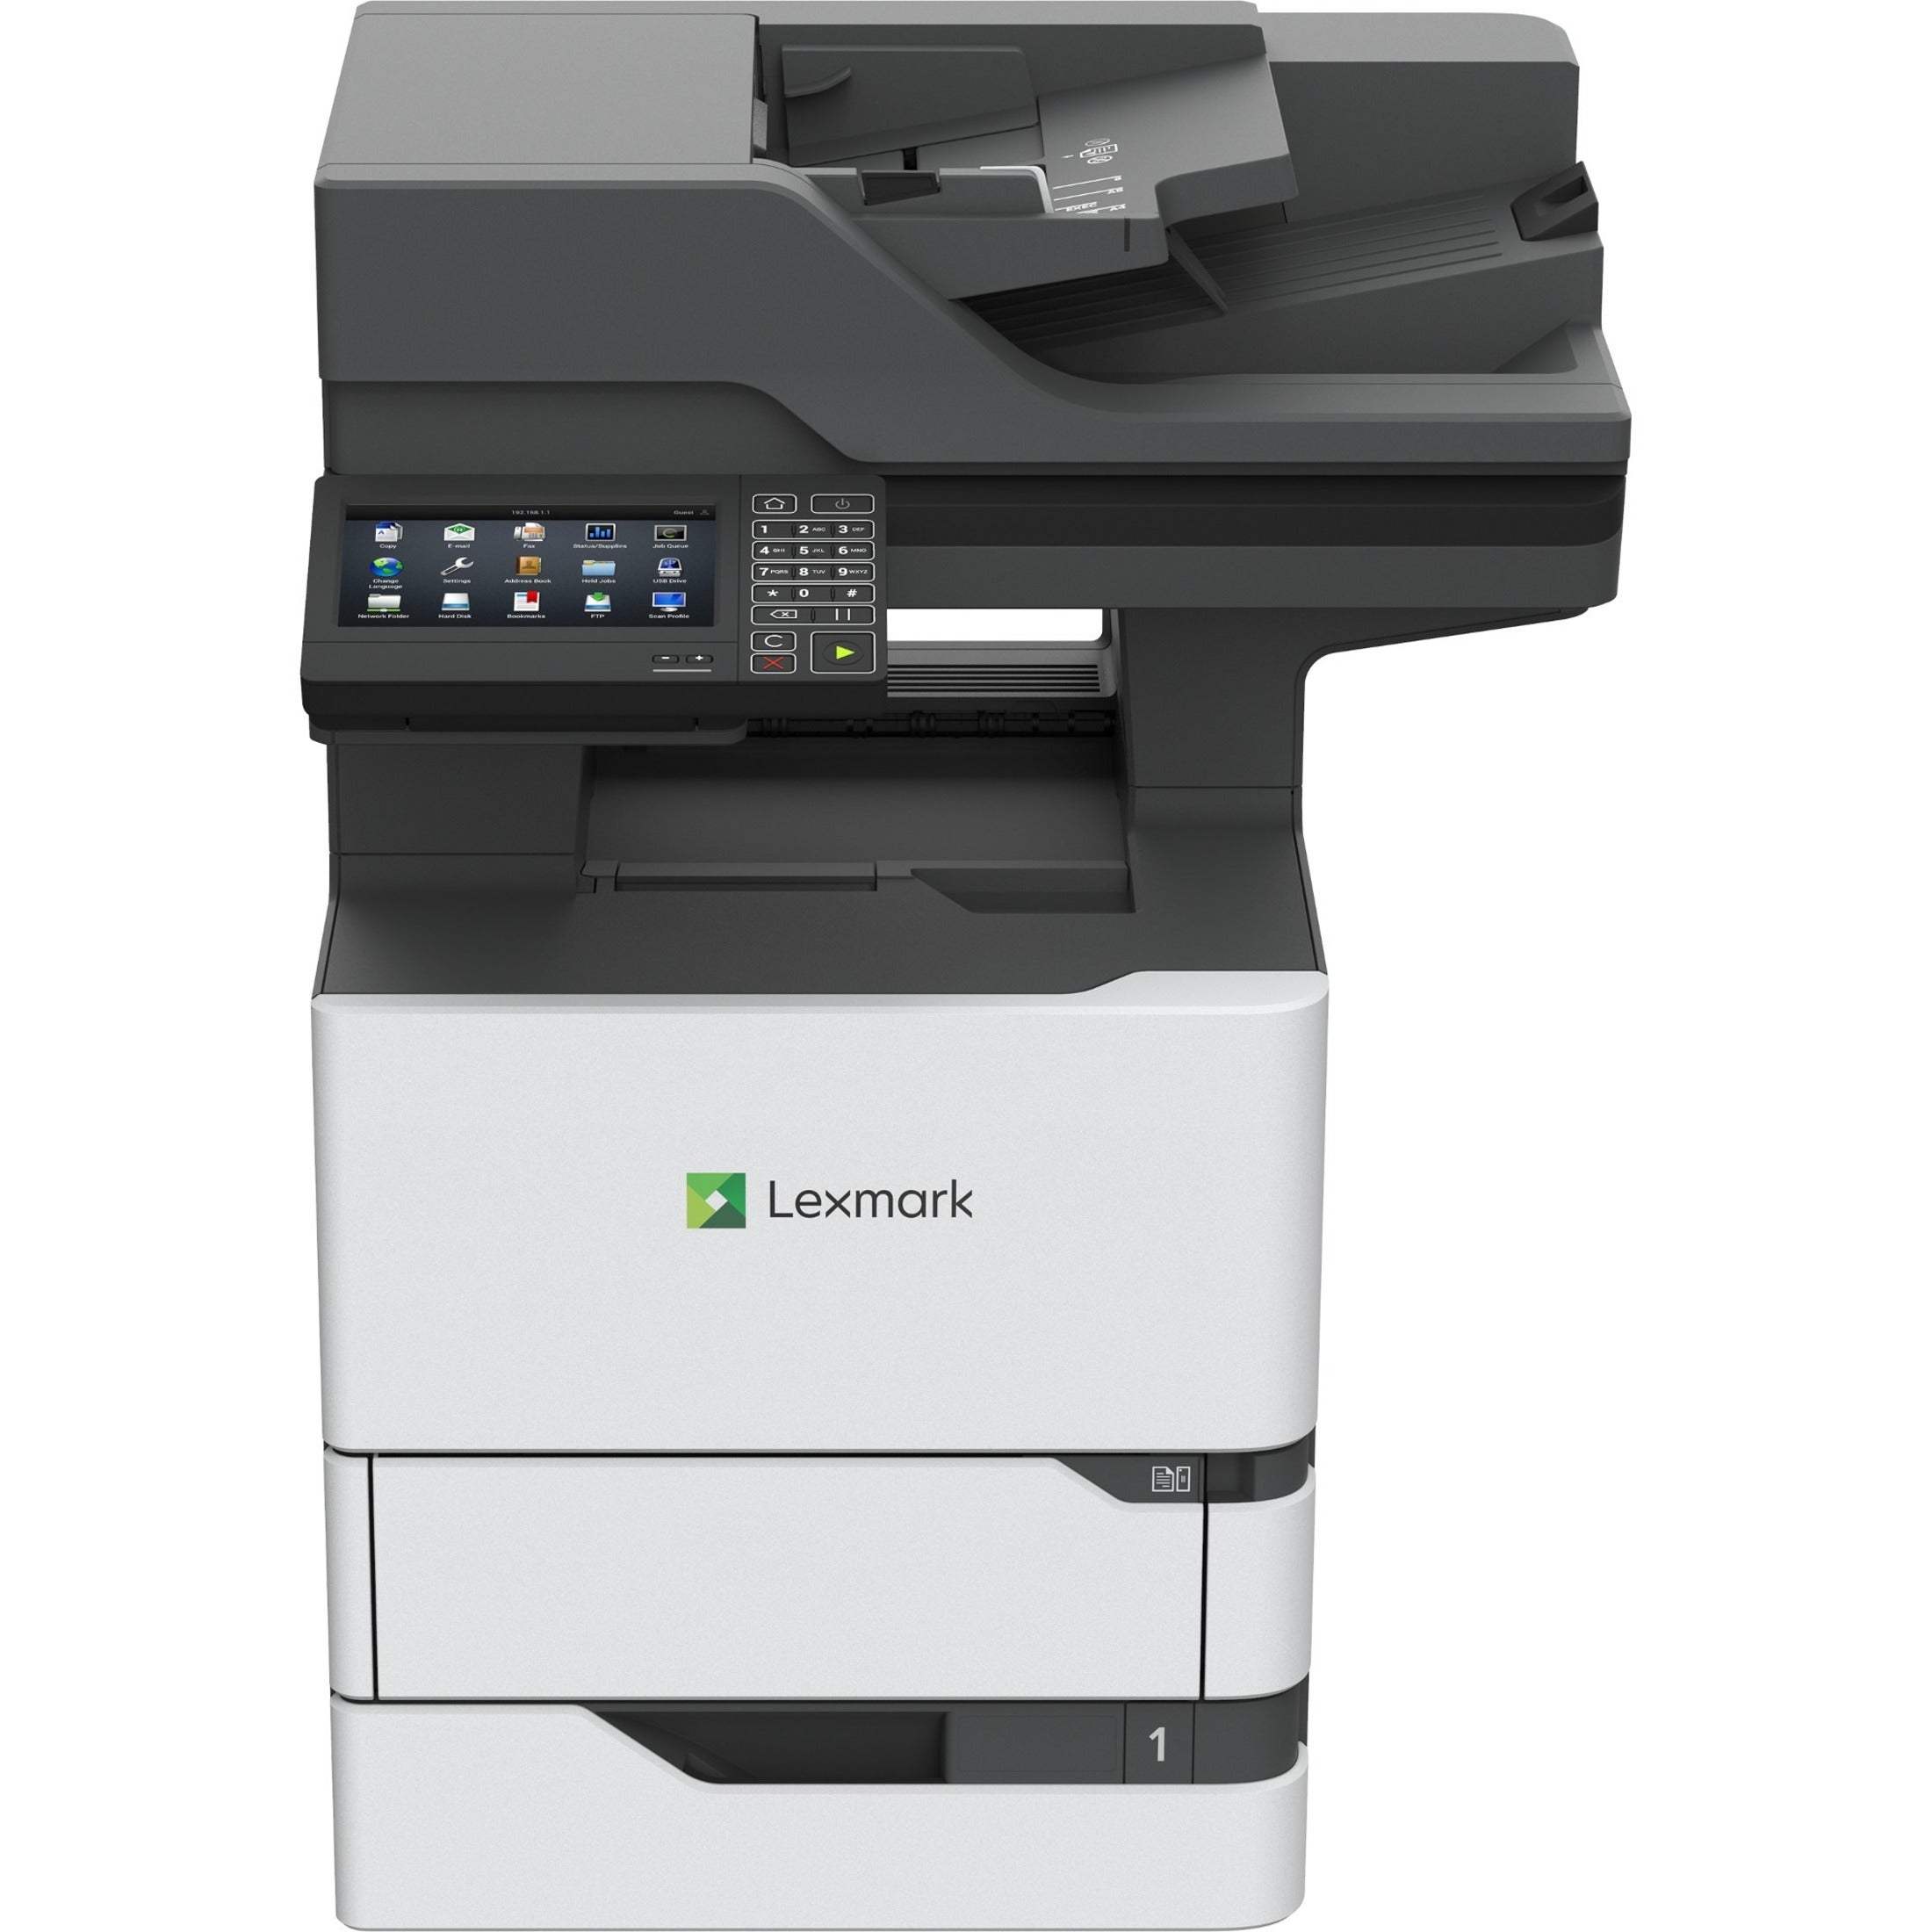 Lexmark 25B0000 MX721ade Multifunction Laser Printer, Monochrome, 65 ppm, Automatic Duplex Print